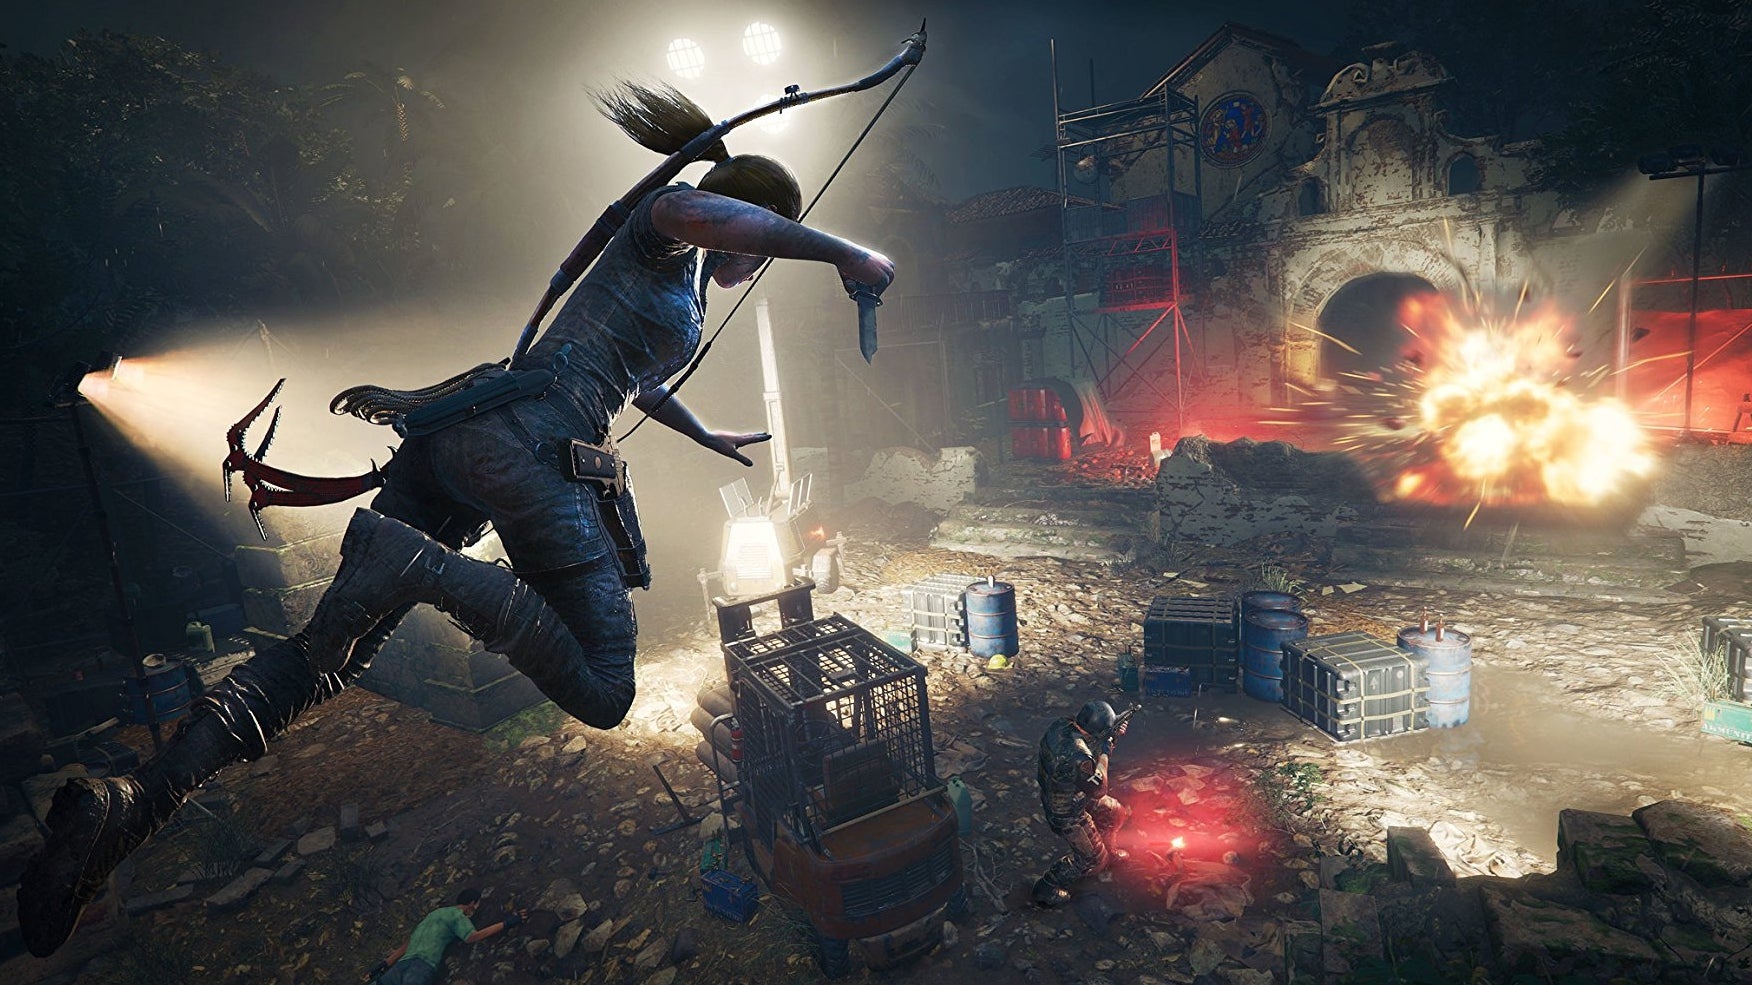 Obrazki dla Shadow of the Tomb Raider - Poradnik, Solucja